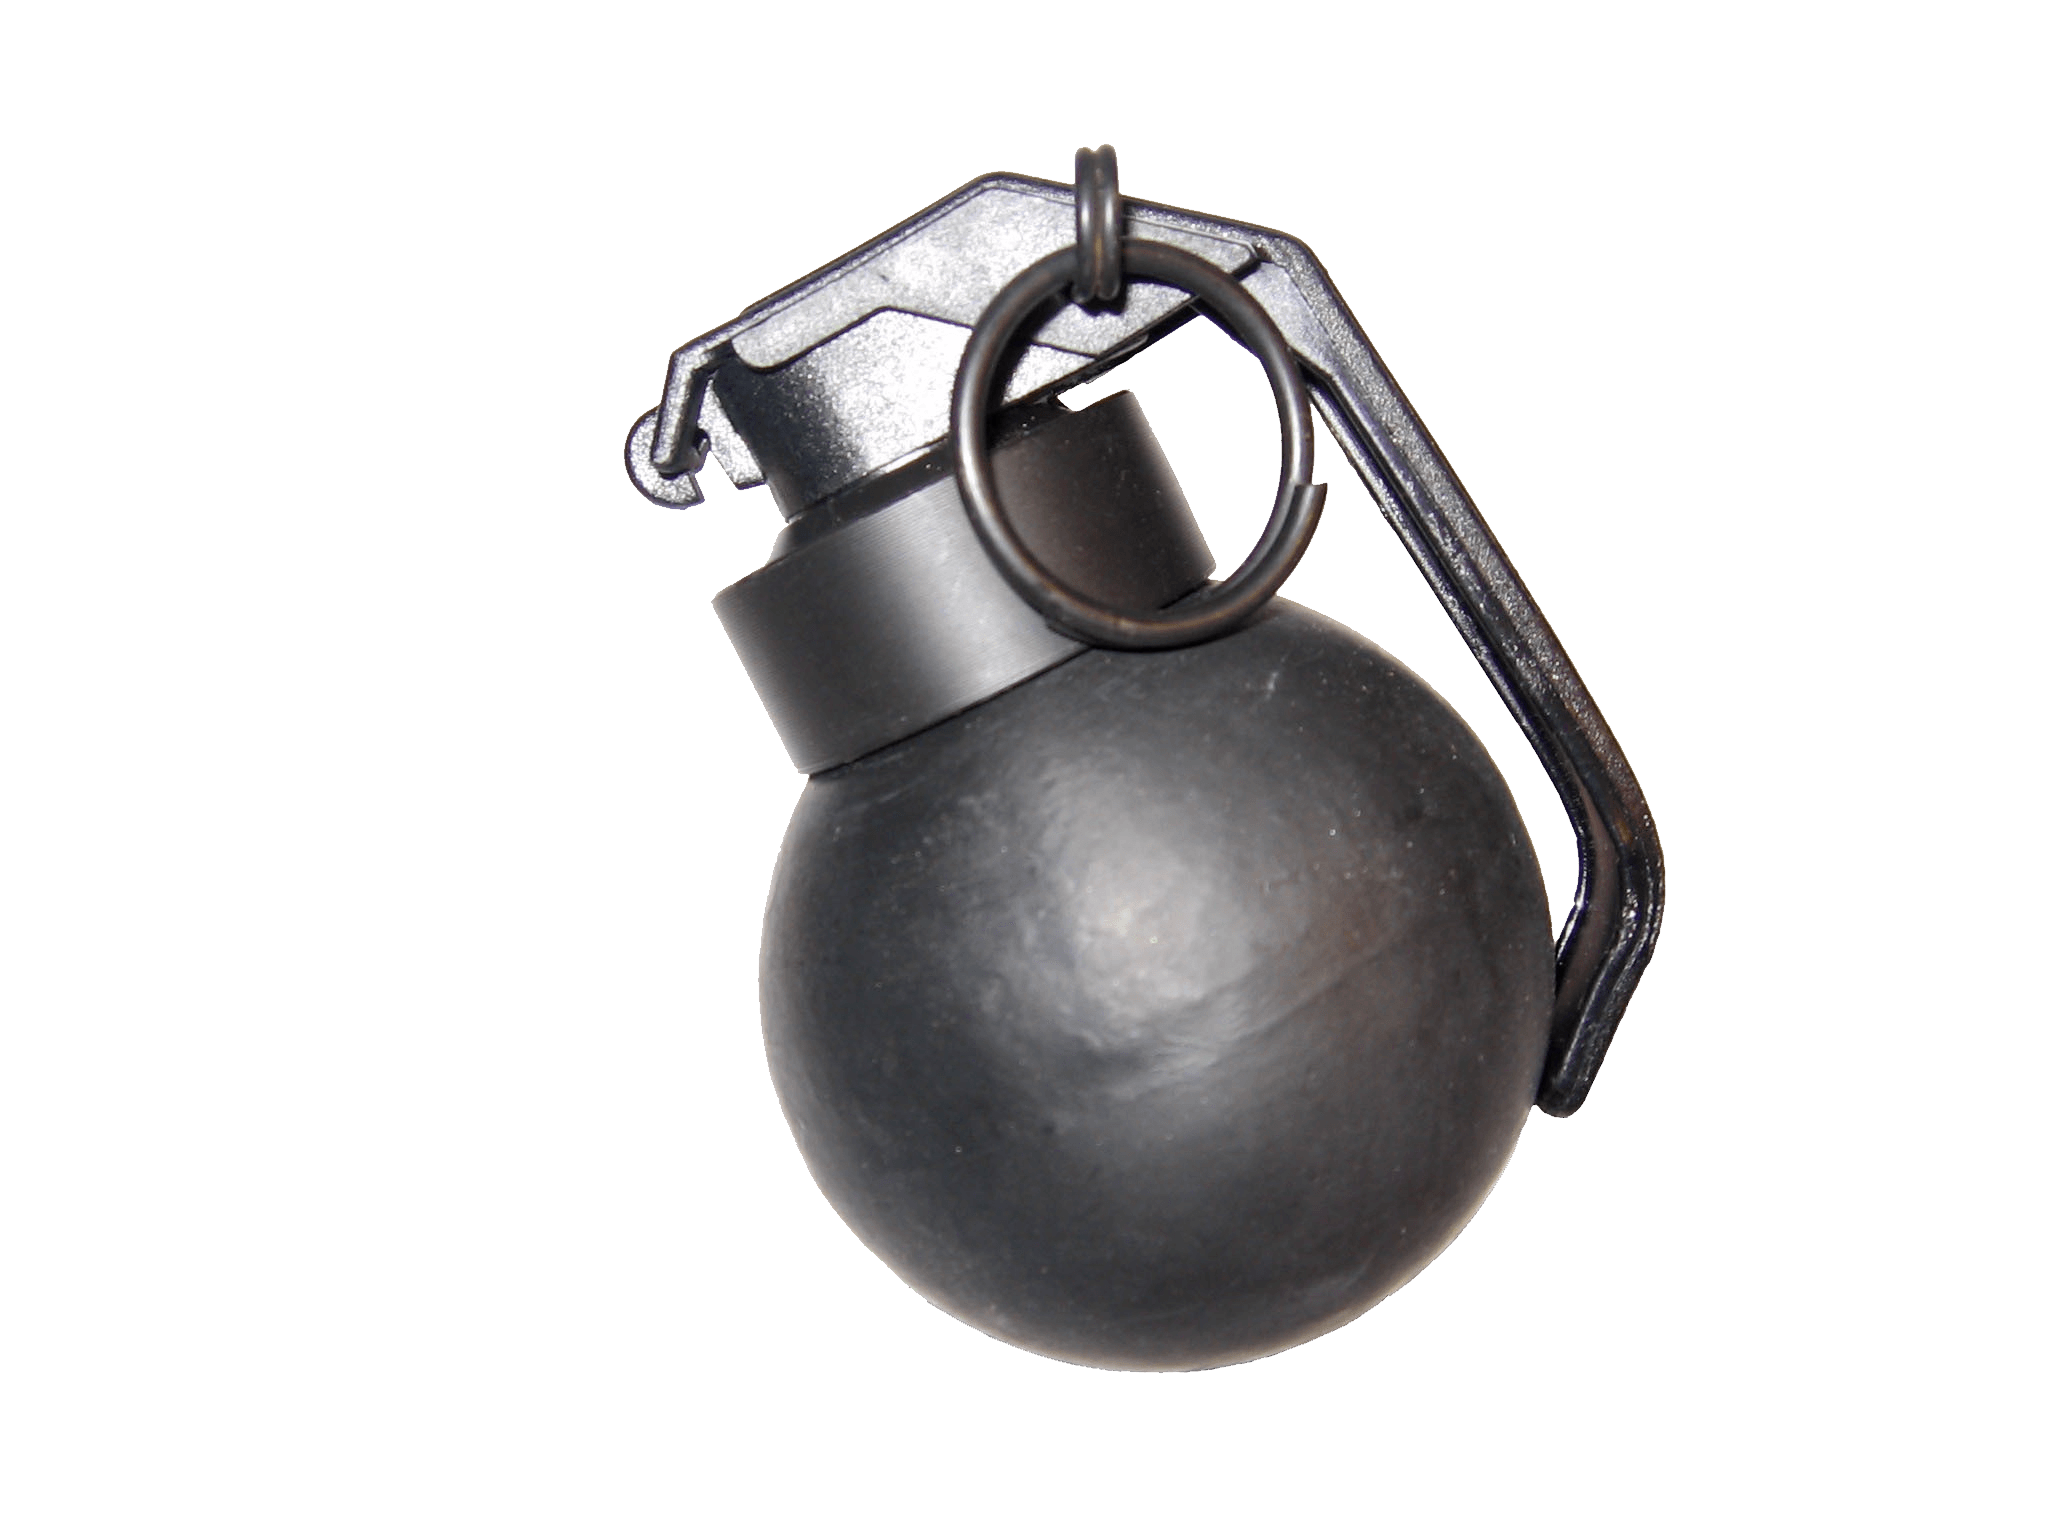 Hand Grenade Png Image PNG Image